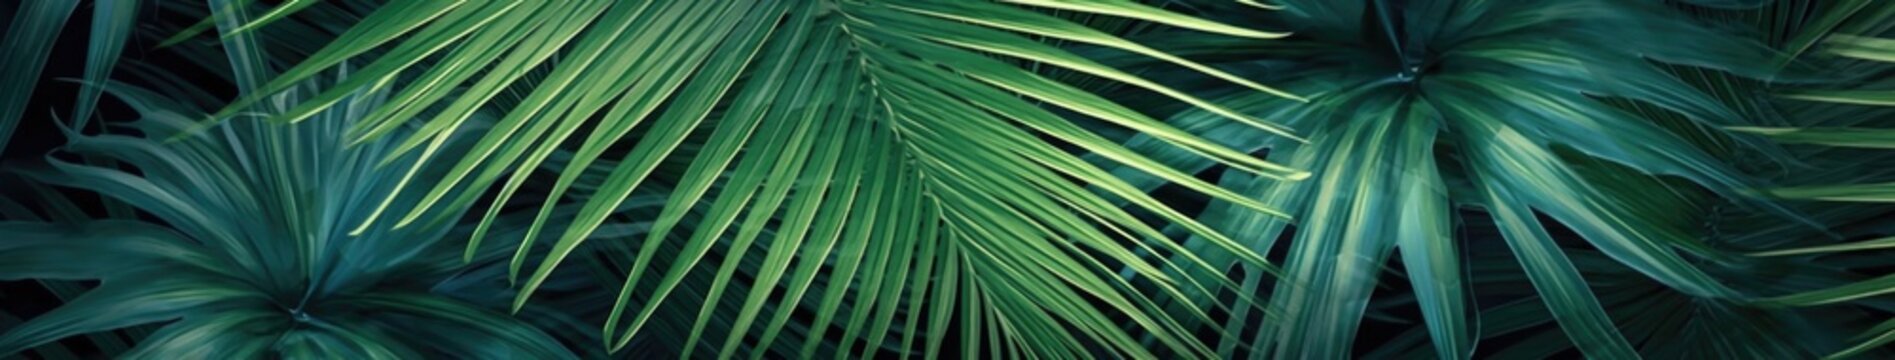 Tropical palm leaves, jungle leaf floral pattern background